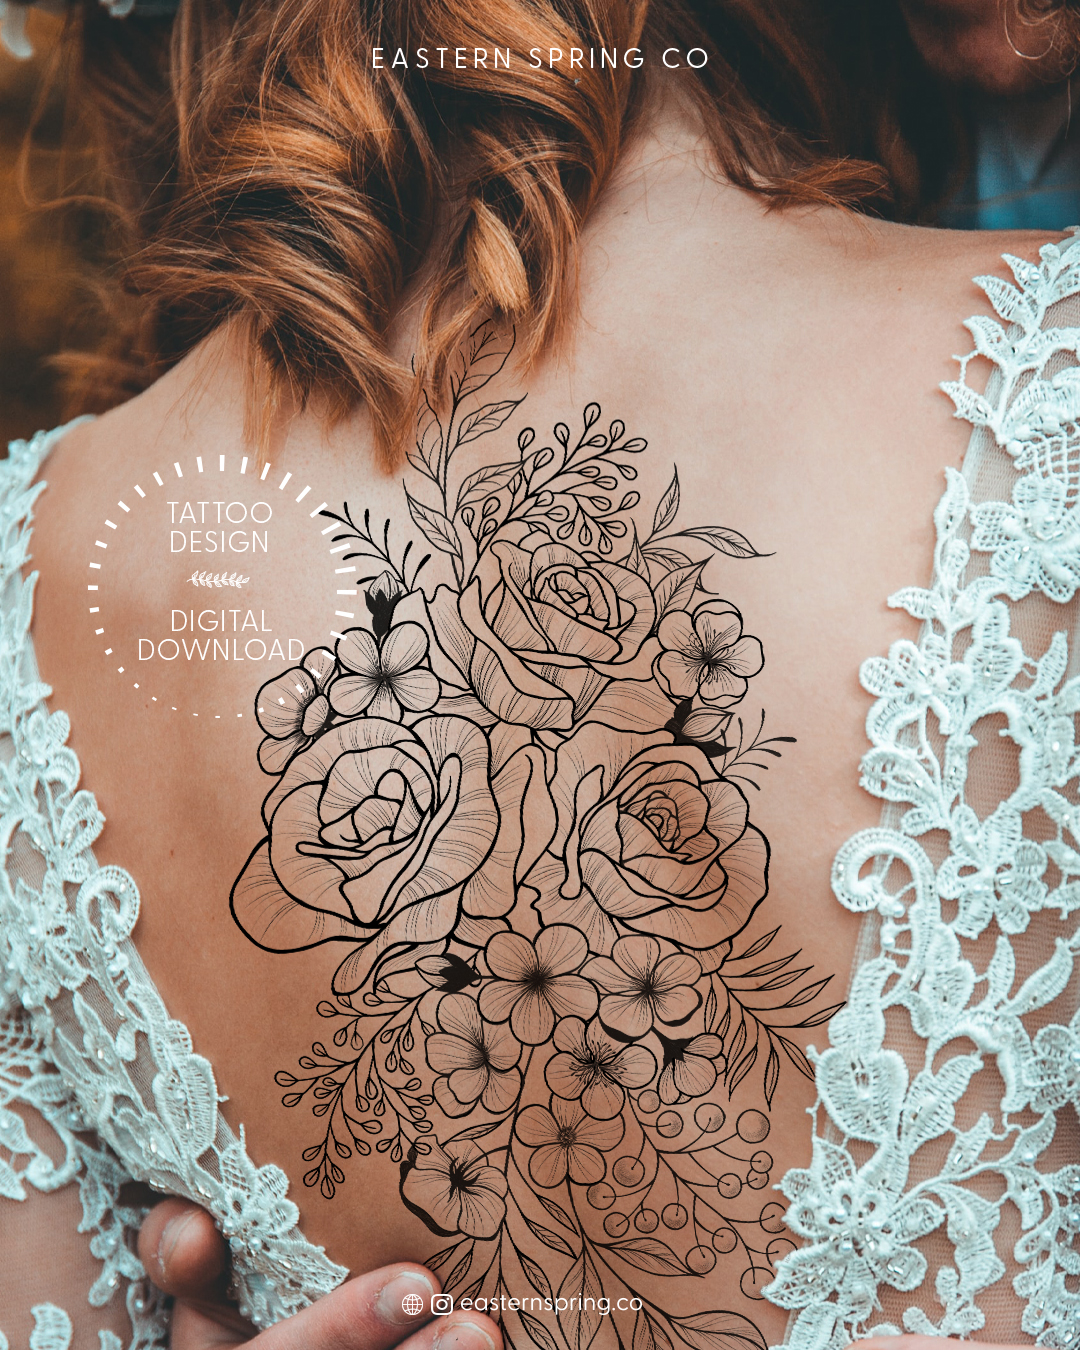 Eastern Spring Co artistic tattoo design, The Secret Garden